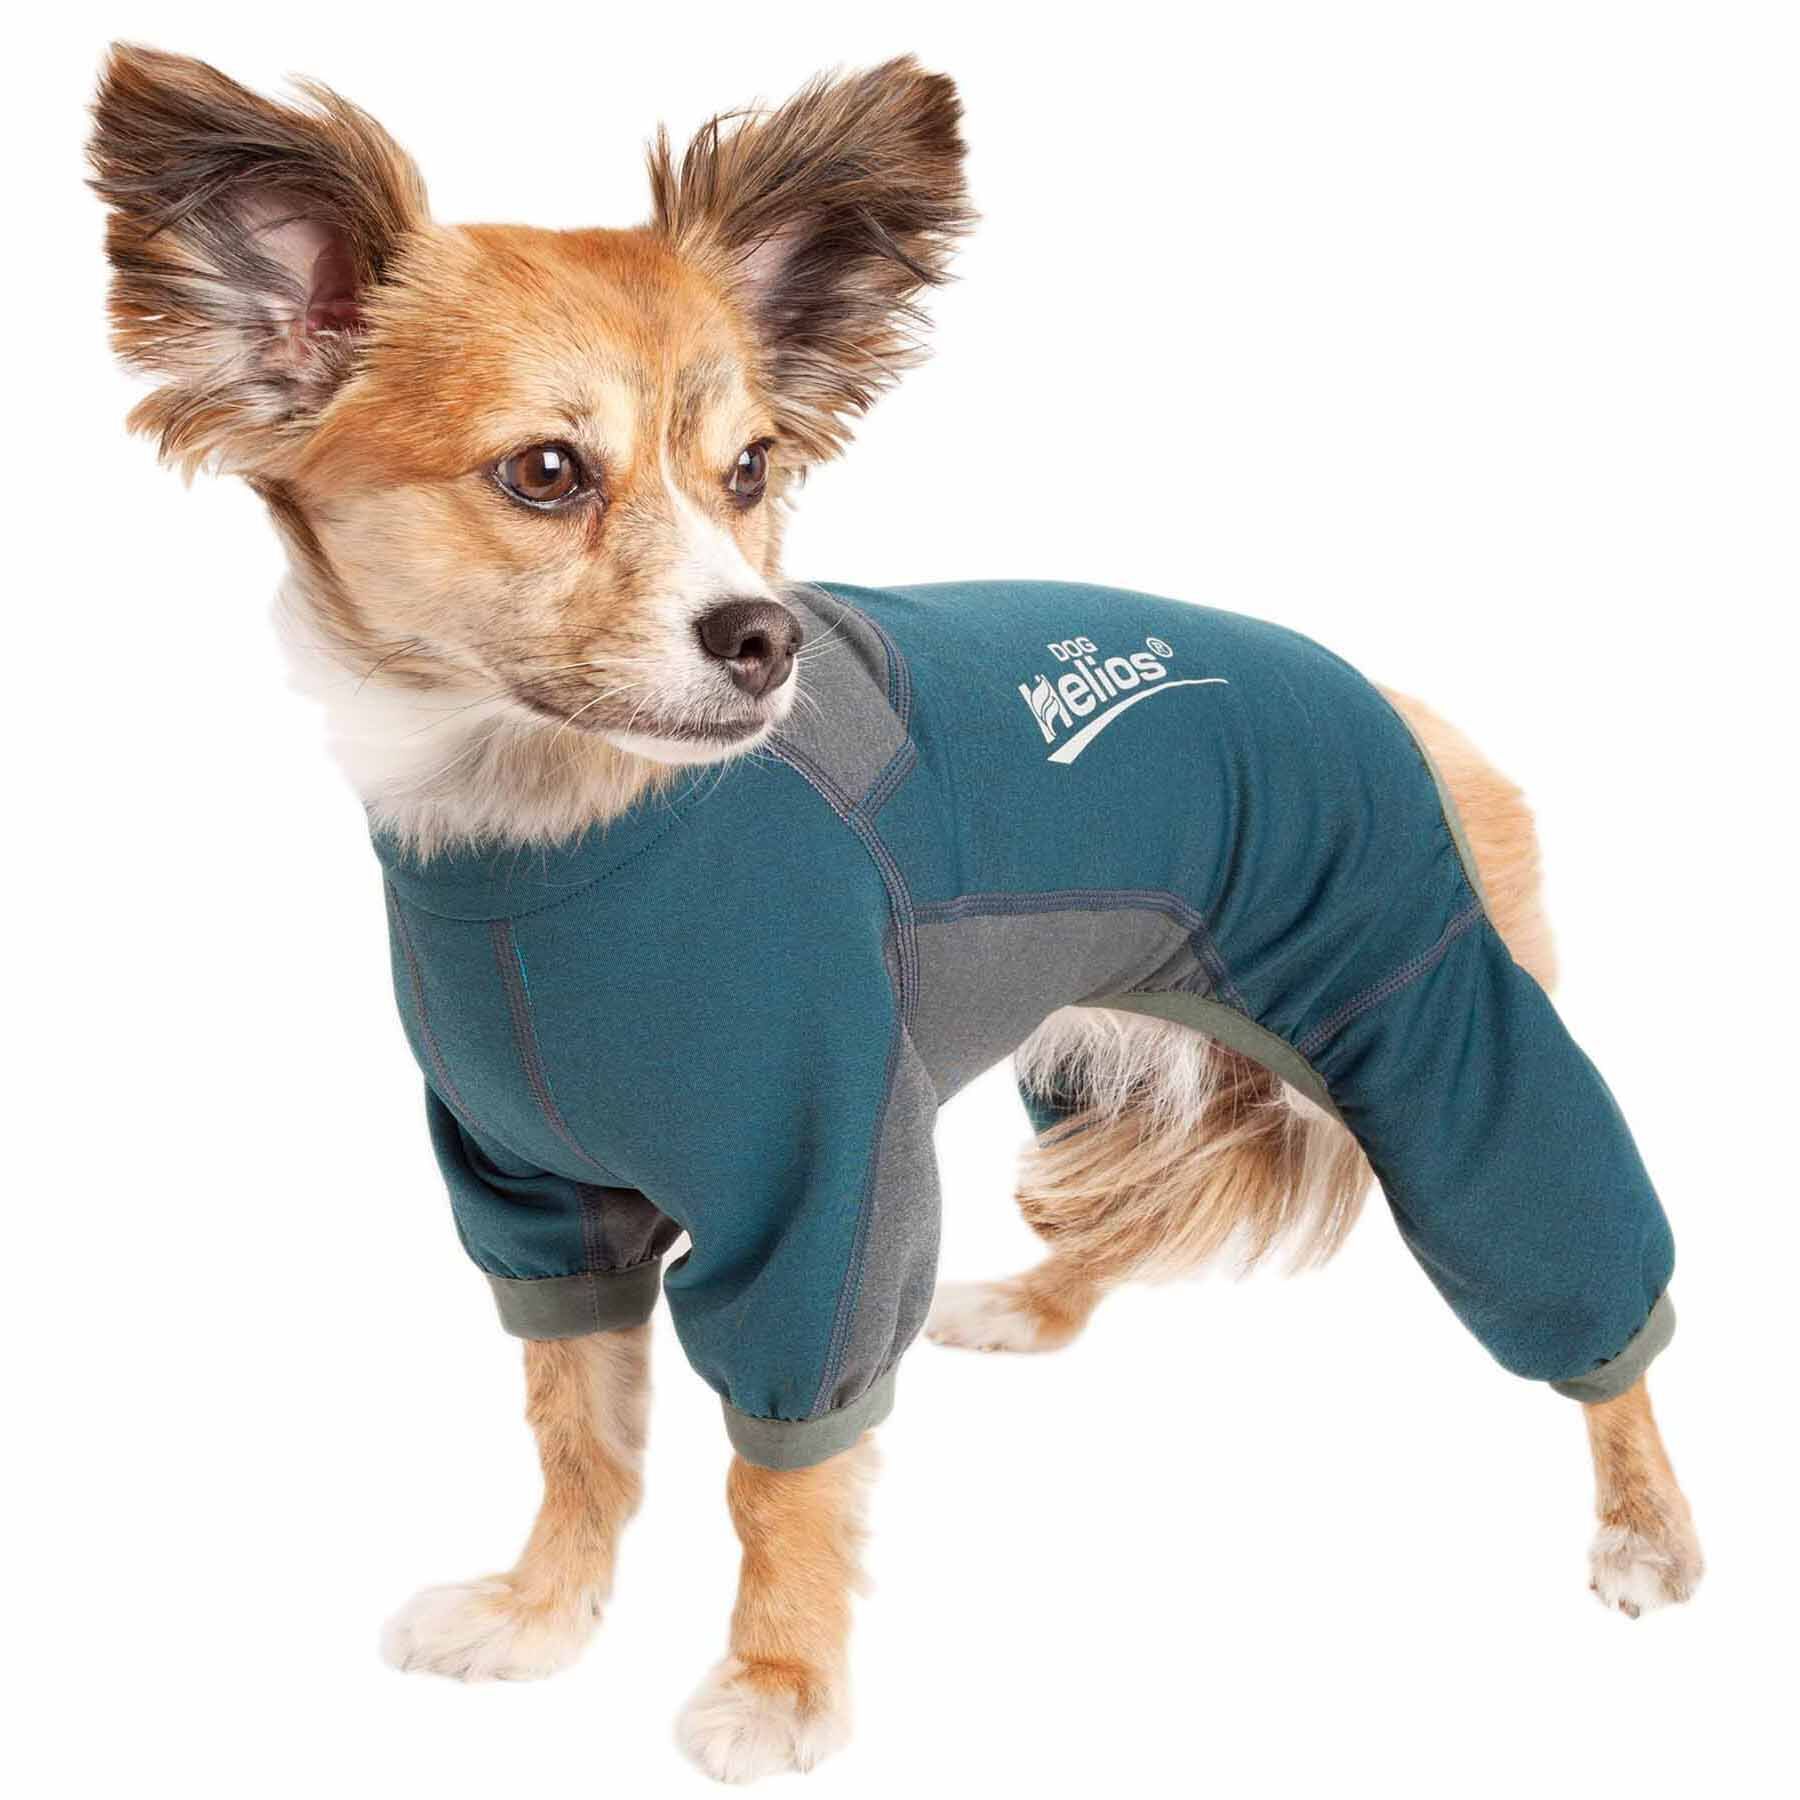 Pet Life Dog Helios ® 'Rufflex' Mediumweight 4-Way-Stretch Breathable Full Bodied Performance Dog Warmup Track Suit, X-large, Blue & Grey